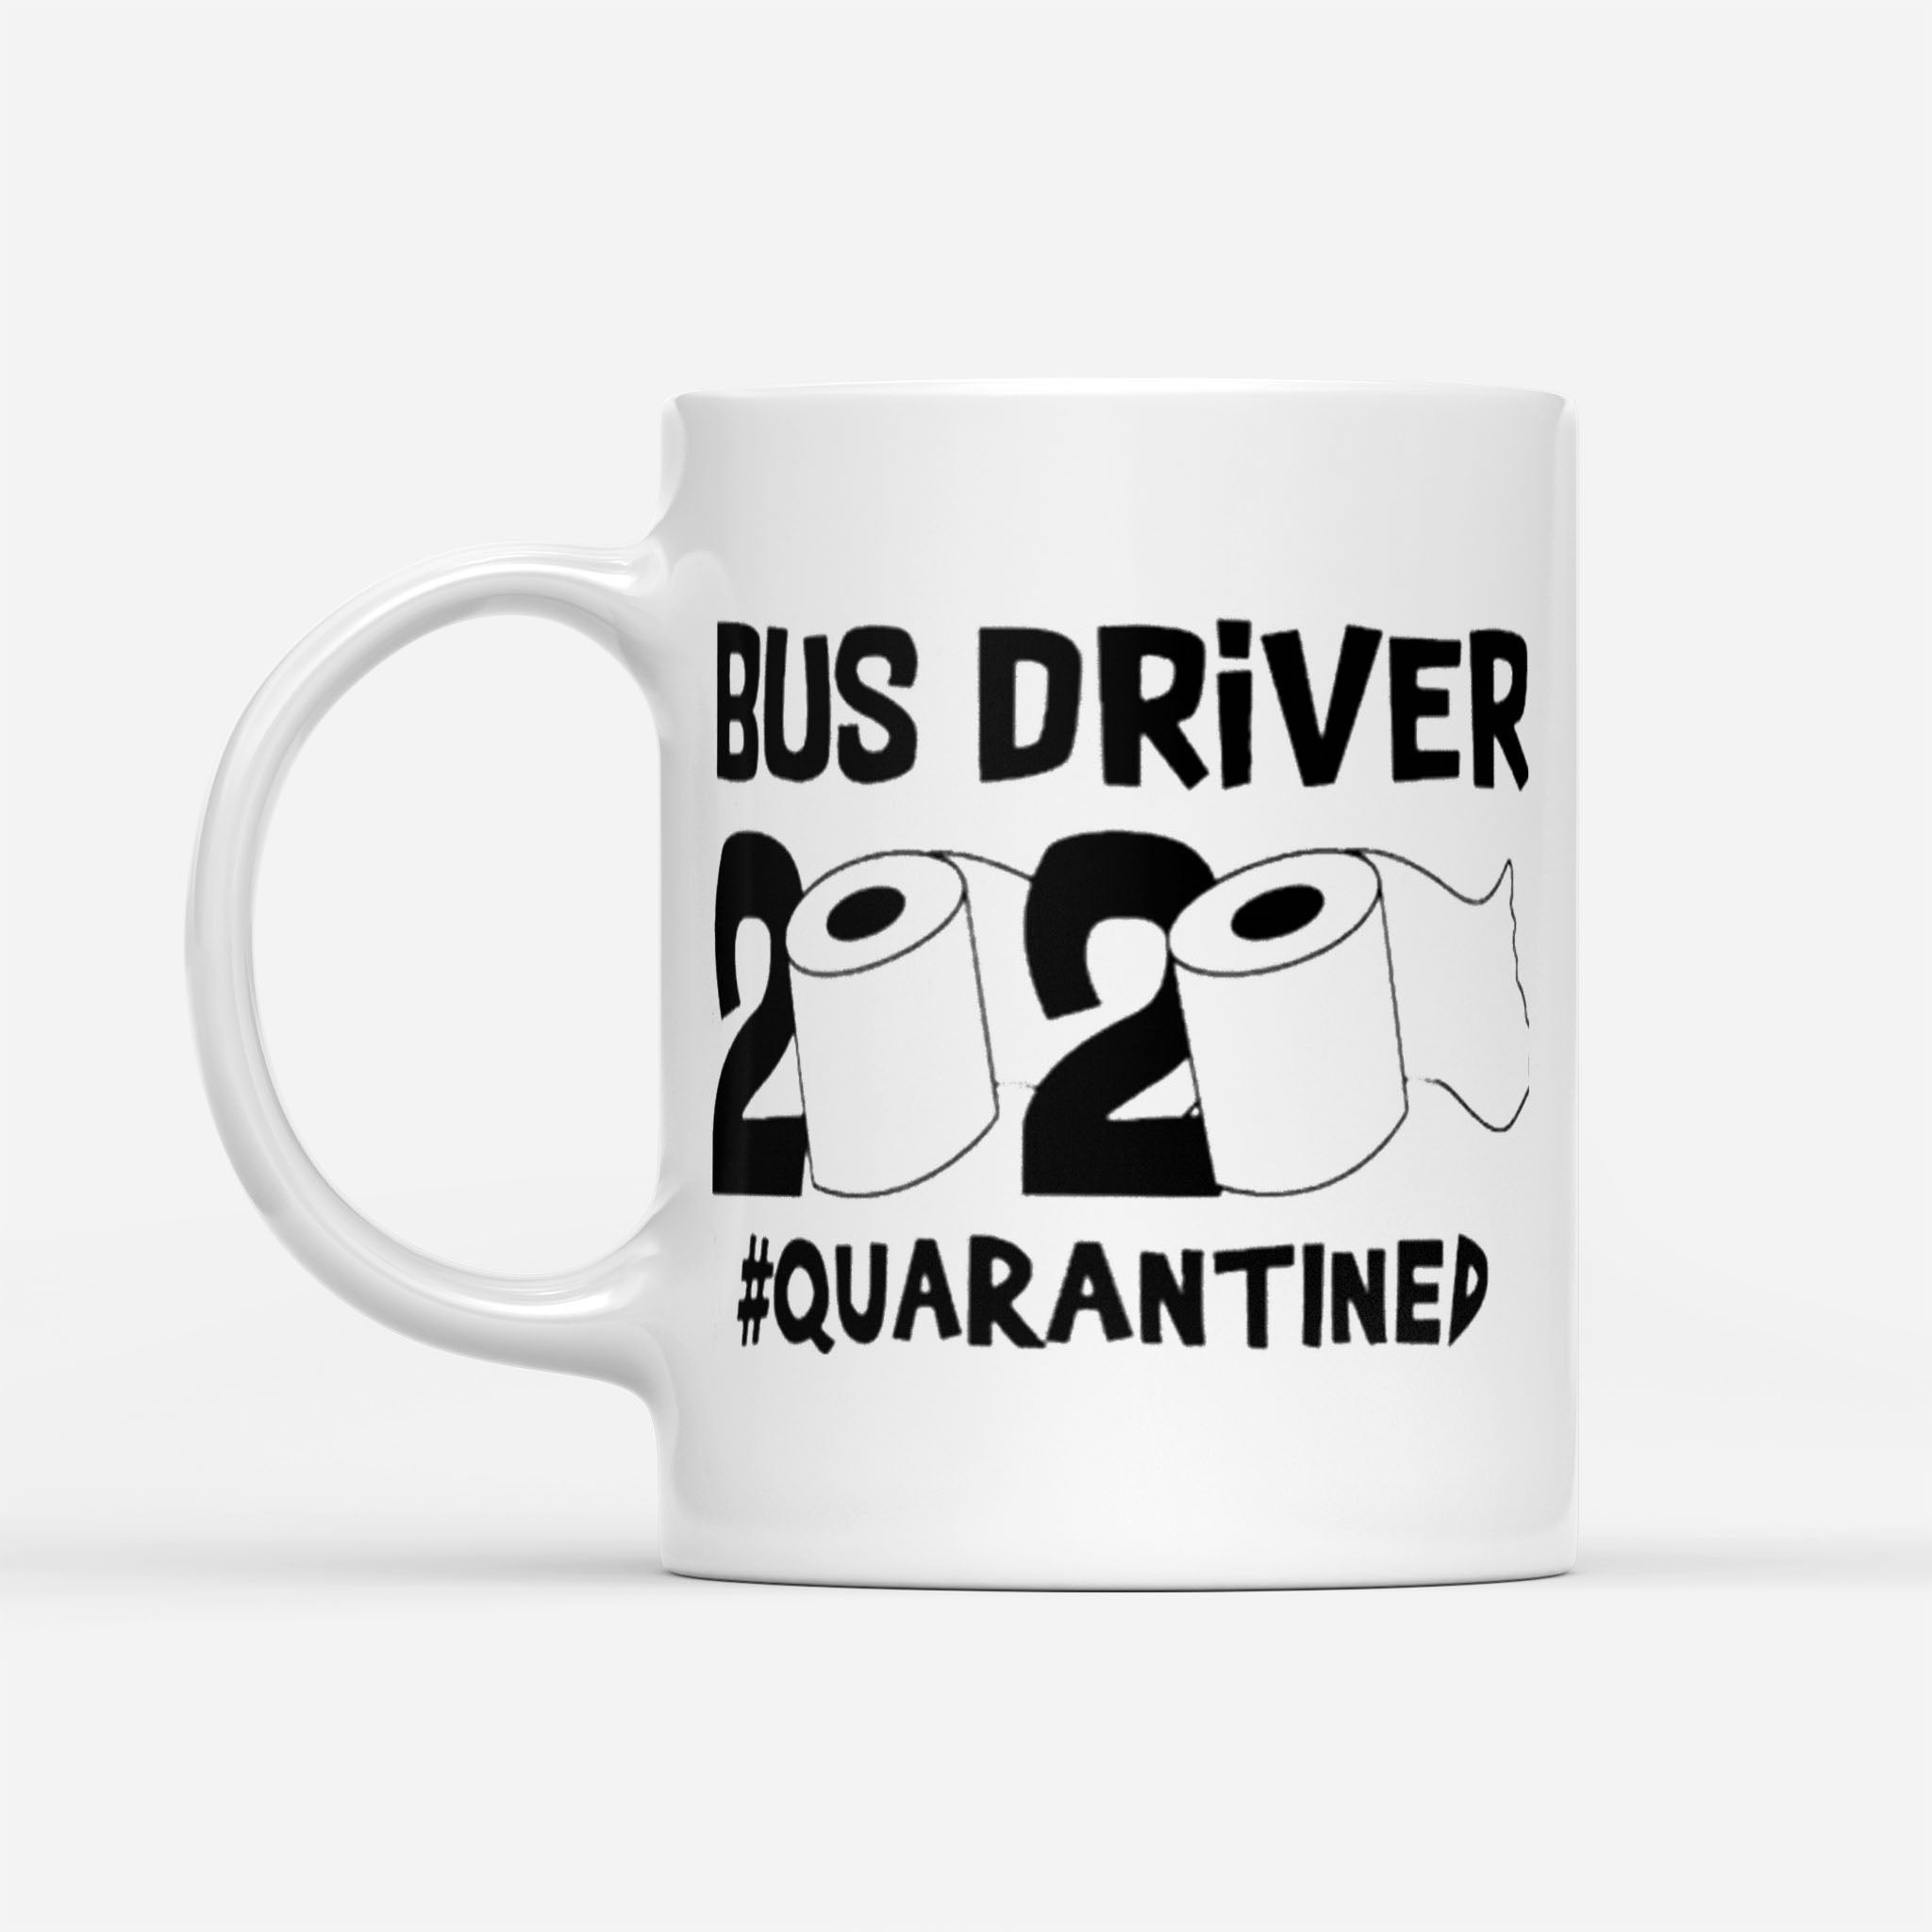 Bus Driver 2020 Quarantine By Moteefes Store - White Mug